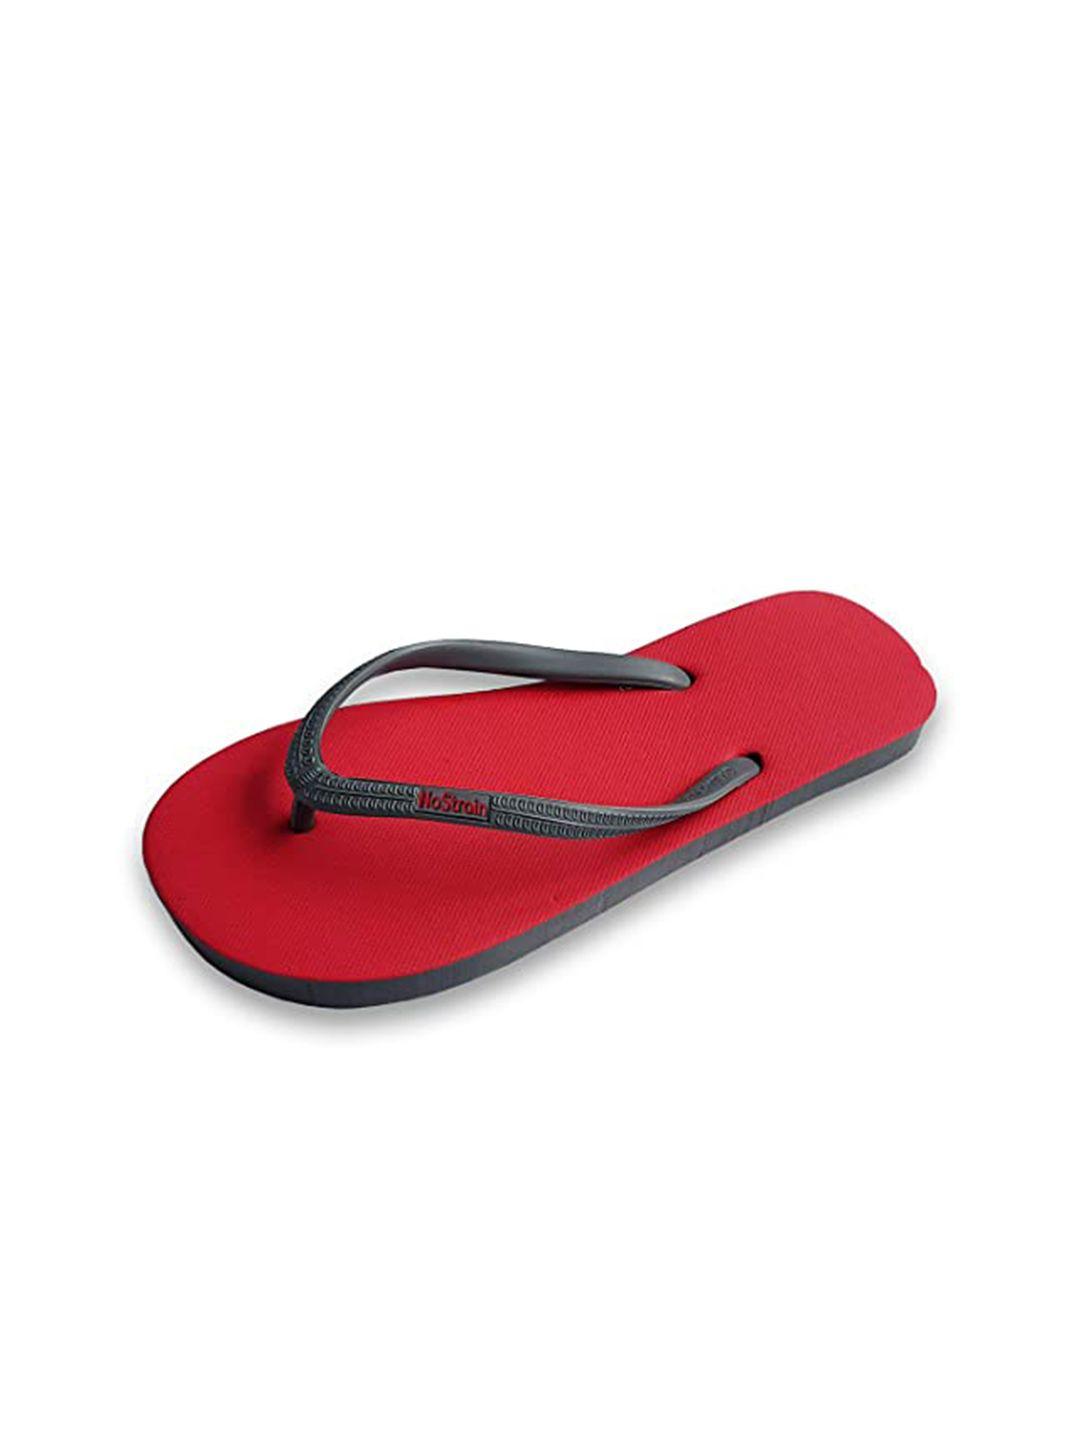 nostrain women anti-skid sole lightweight room slippers